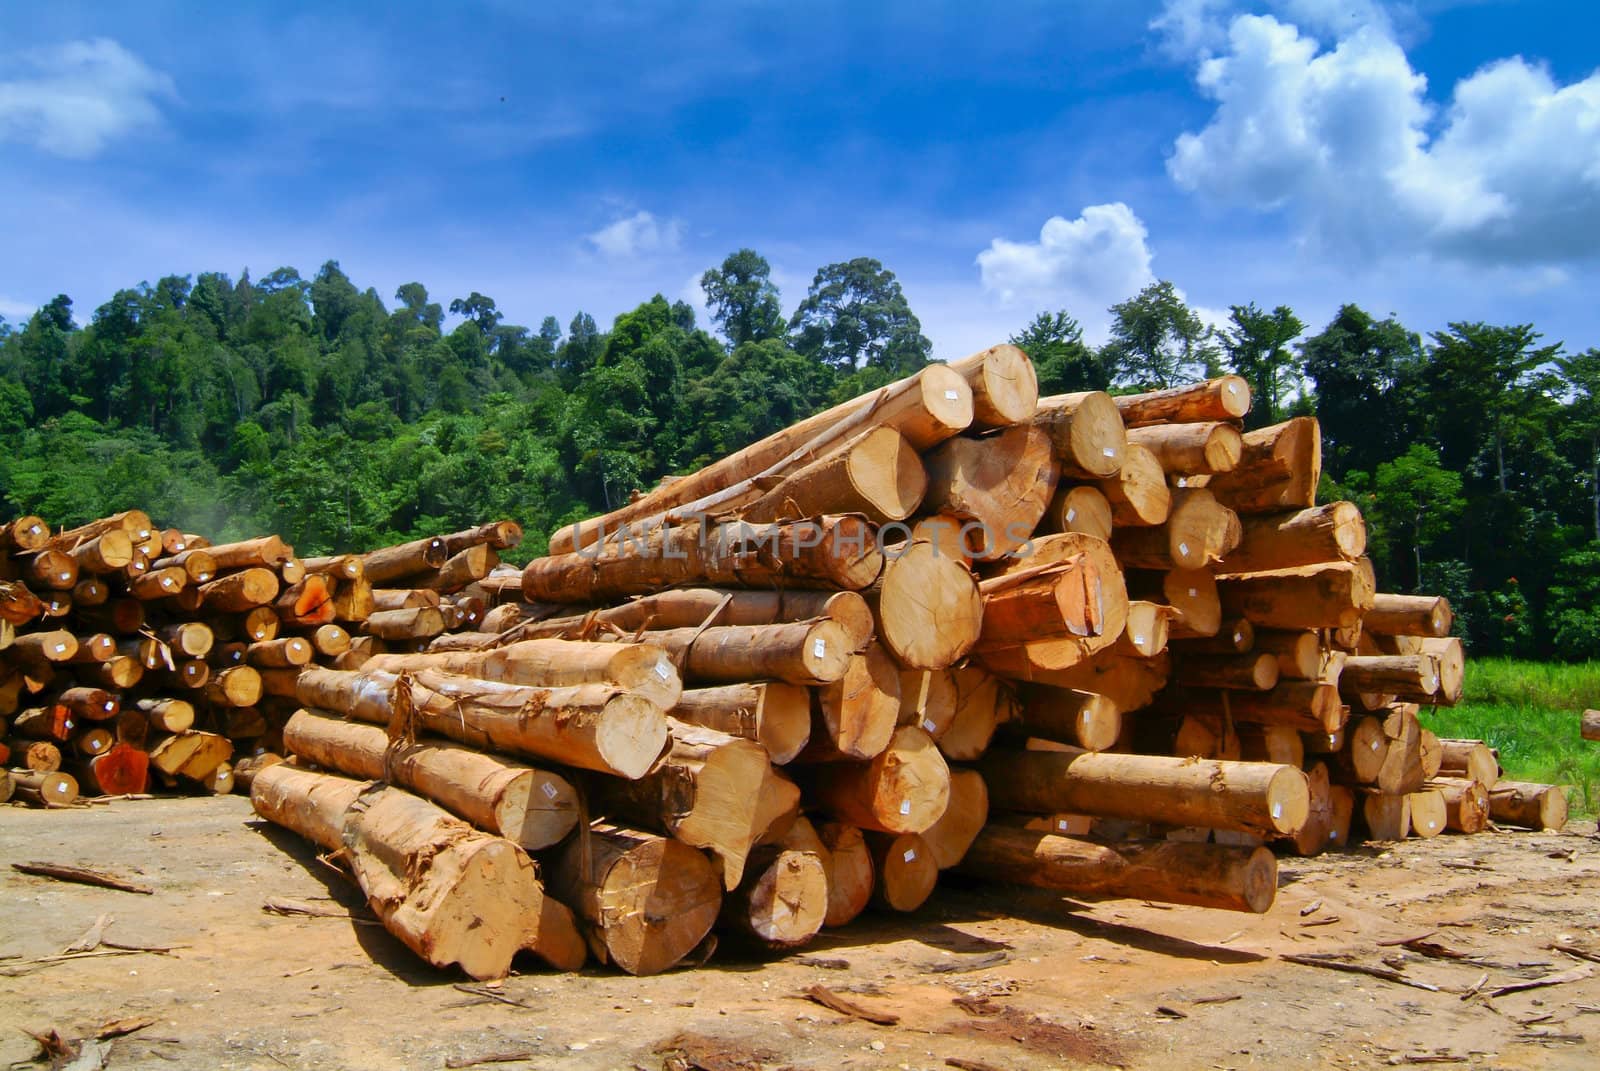 lumber. Wood stacked on shelving inside